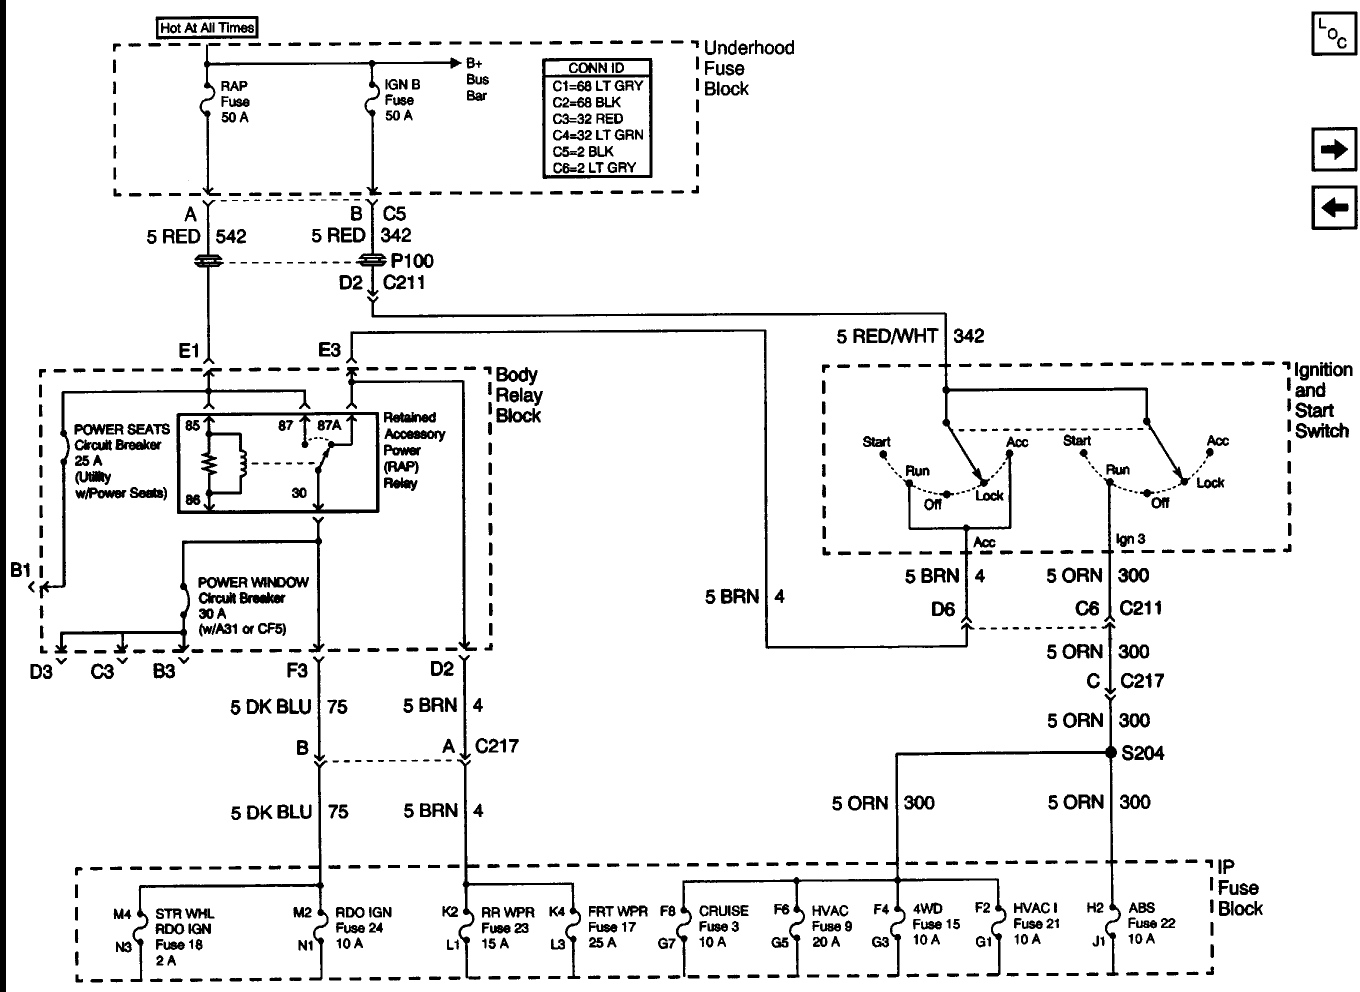 wiring diagram - Blazer Forum - Chevy Blazer Forums